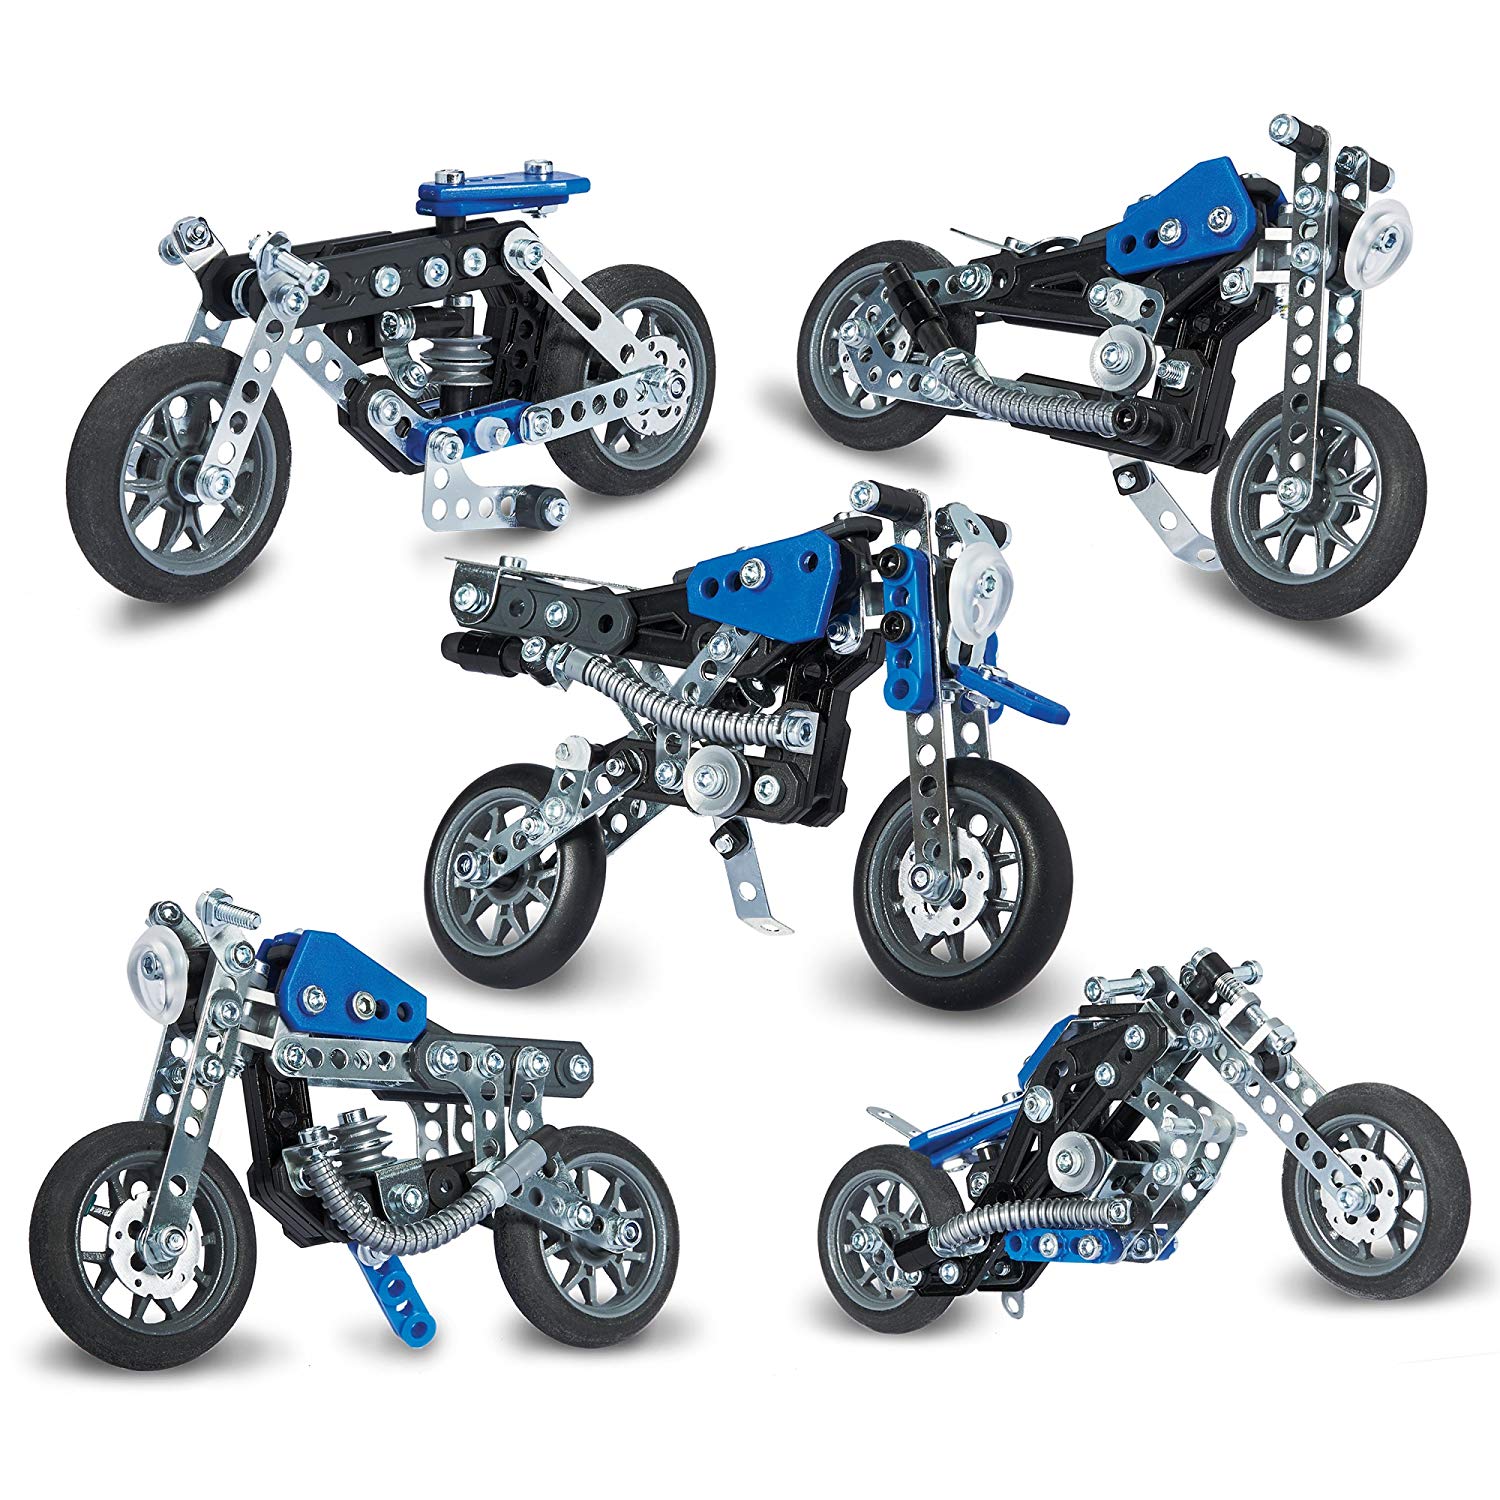 Meccano 5 motos à construire - Jeu de construction